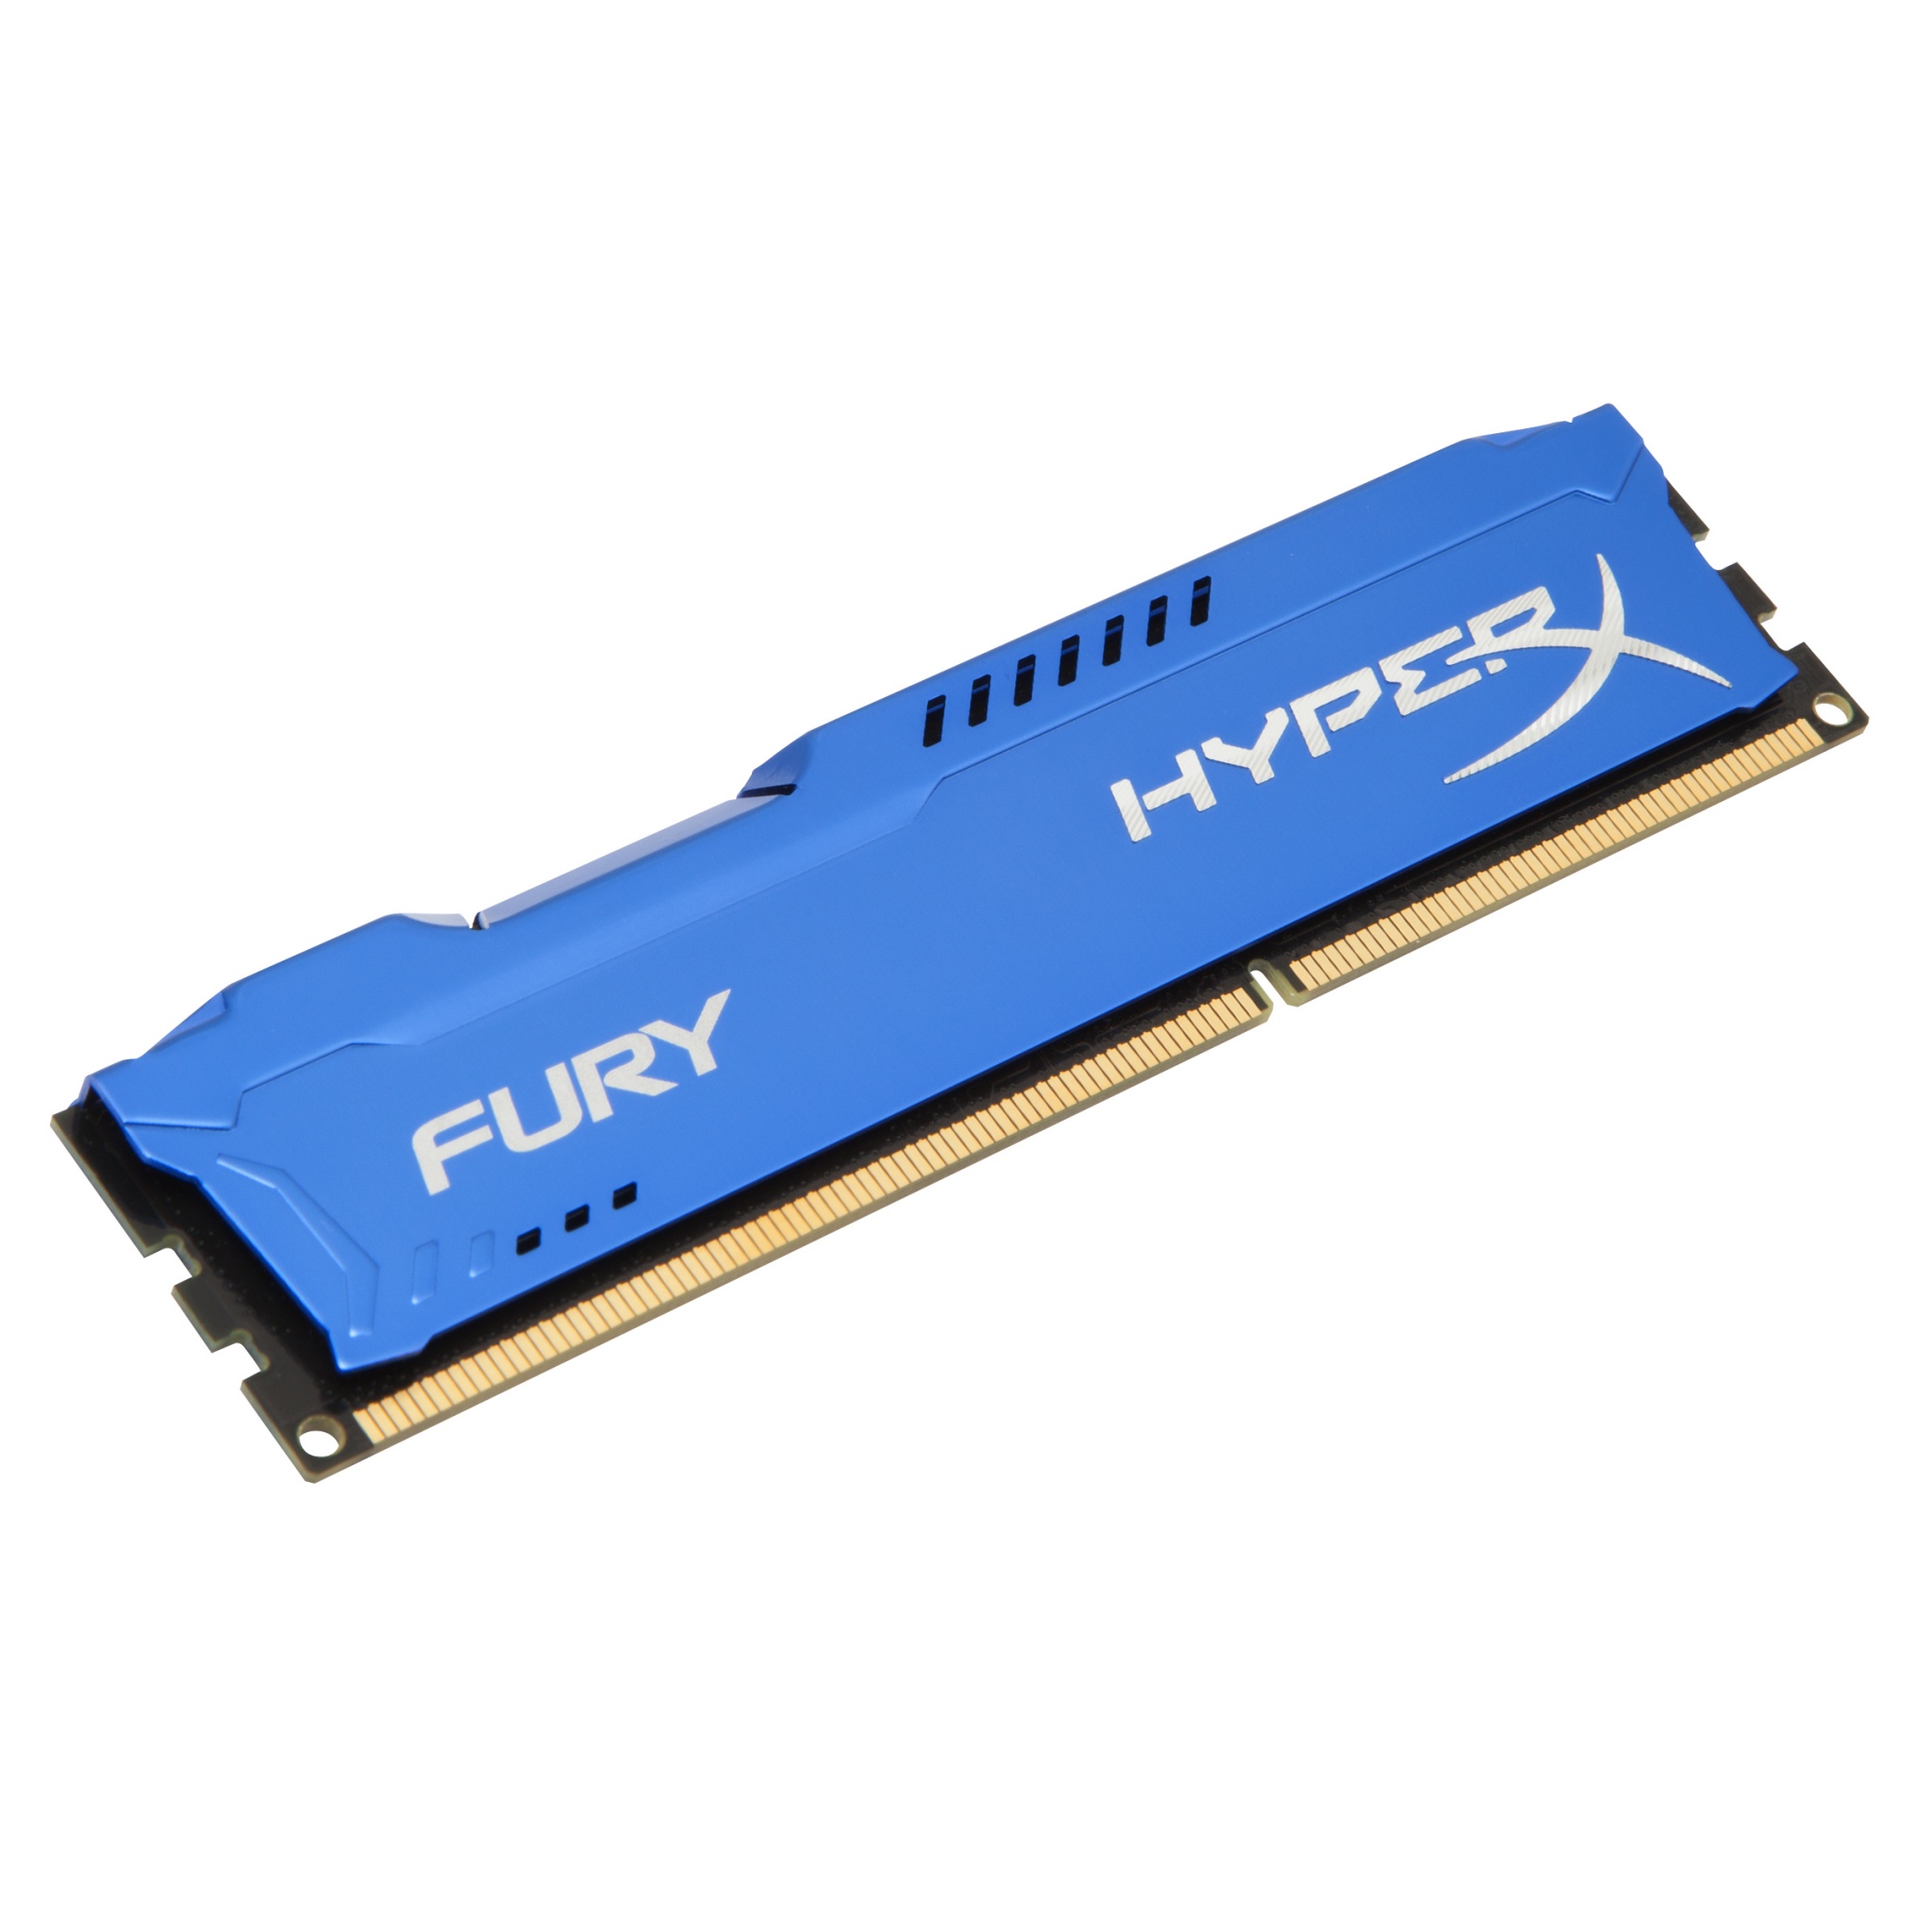 4GB HyperX 1866MHz Memory Module Upgrade - Blue